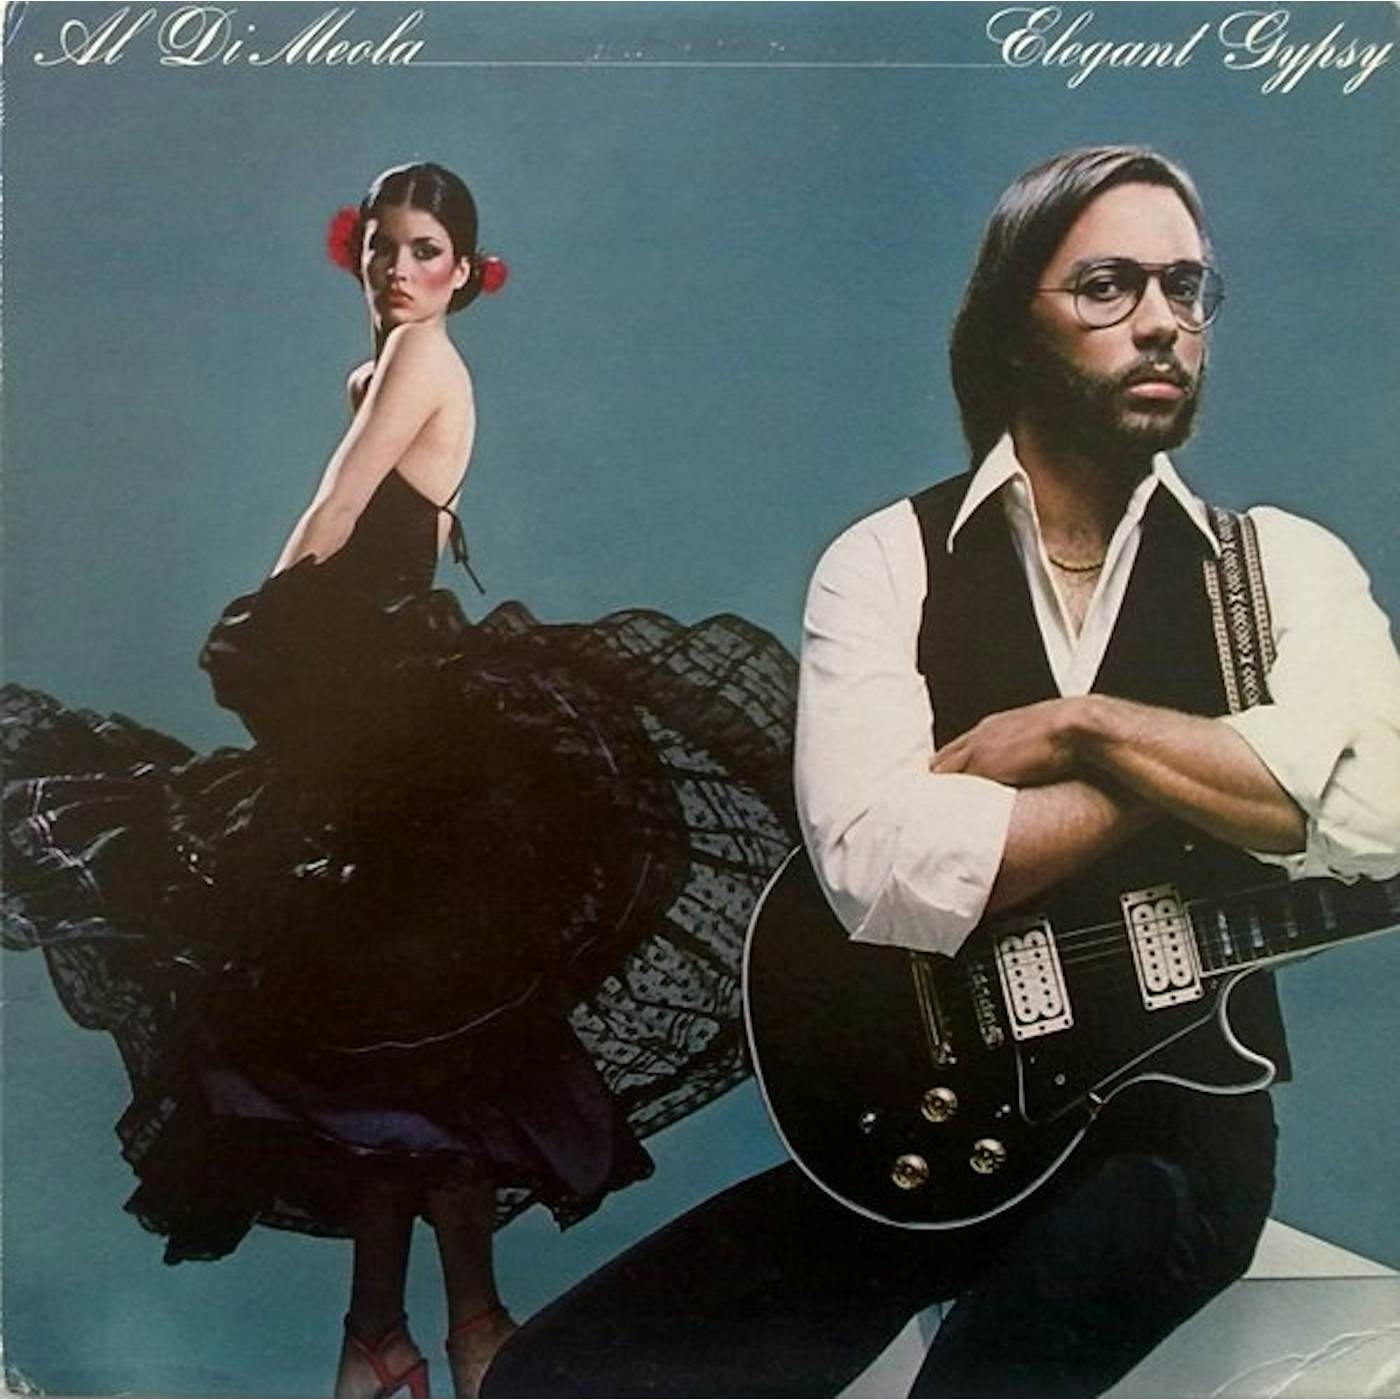 Al Di Meola Elegant Gypsy Vinyl Record